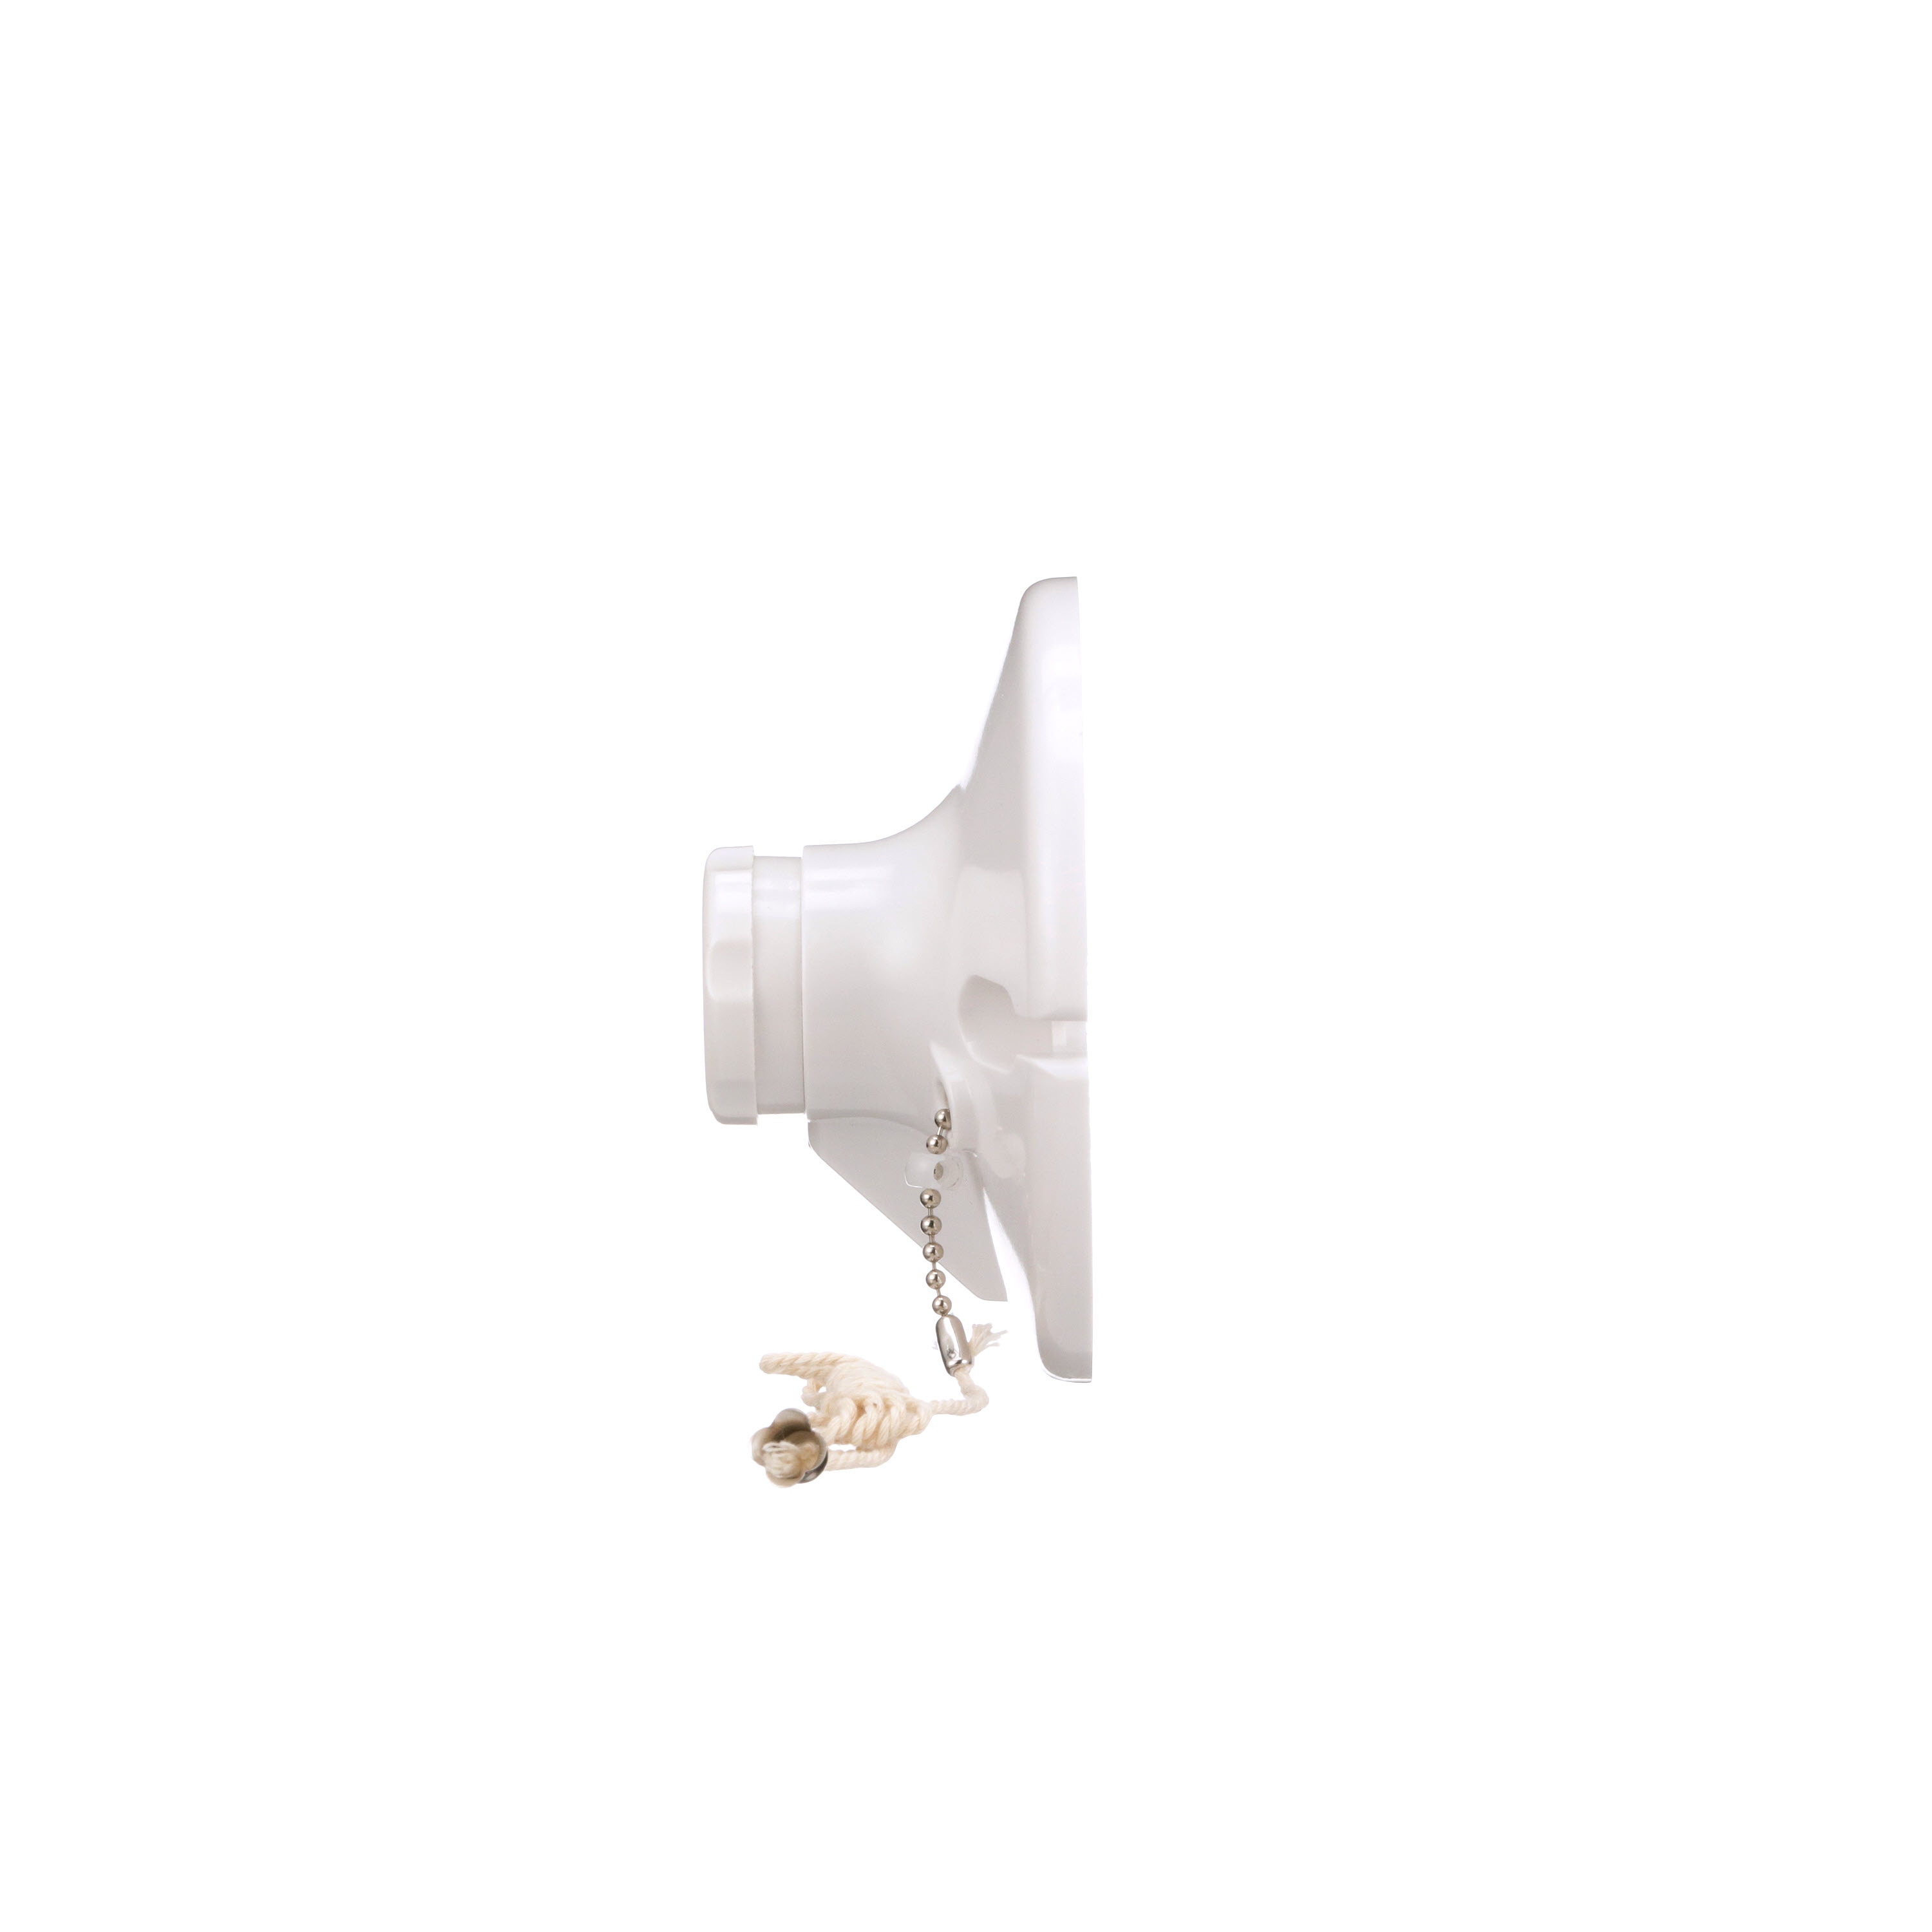 Eaton Wiring 250W Porcelain Lampholder w/ Pull Chain, Medium Base, 250V,  White (Eaton Wiring 659-SP)